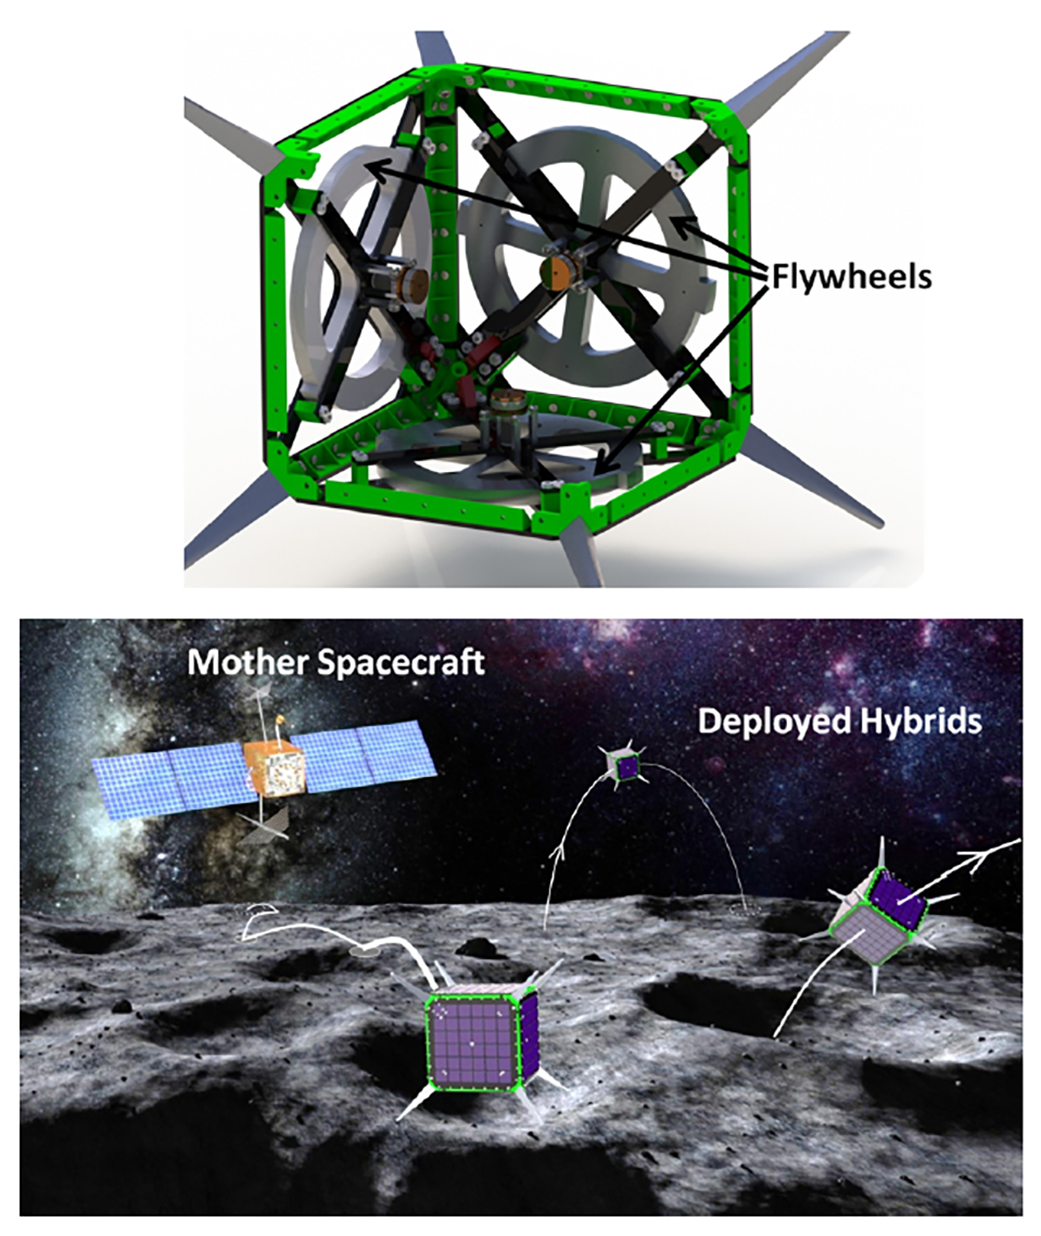 Flywheels, Mother Spacecraft, Deployed Hybrids